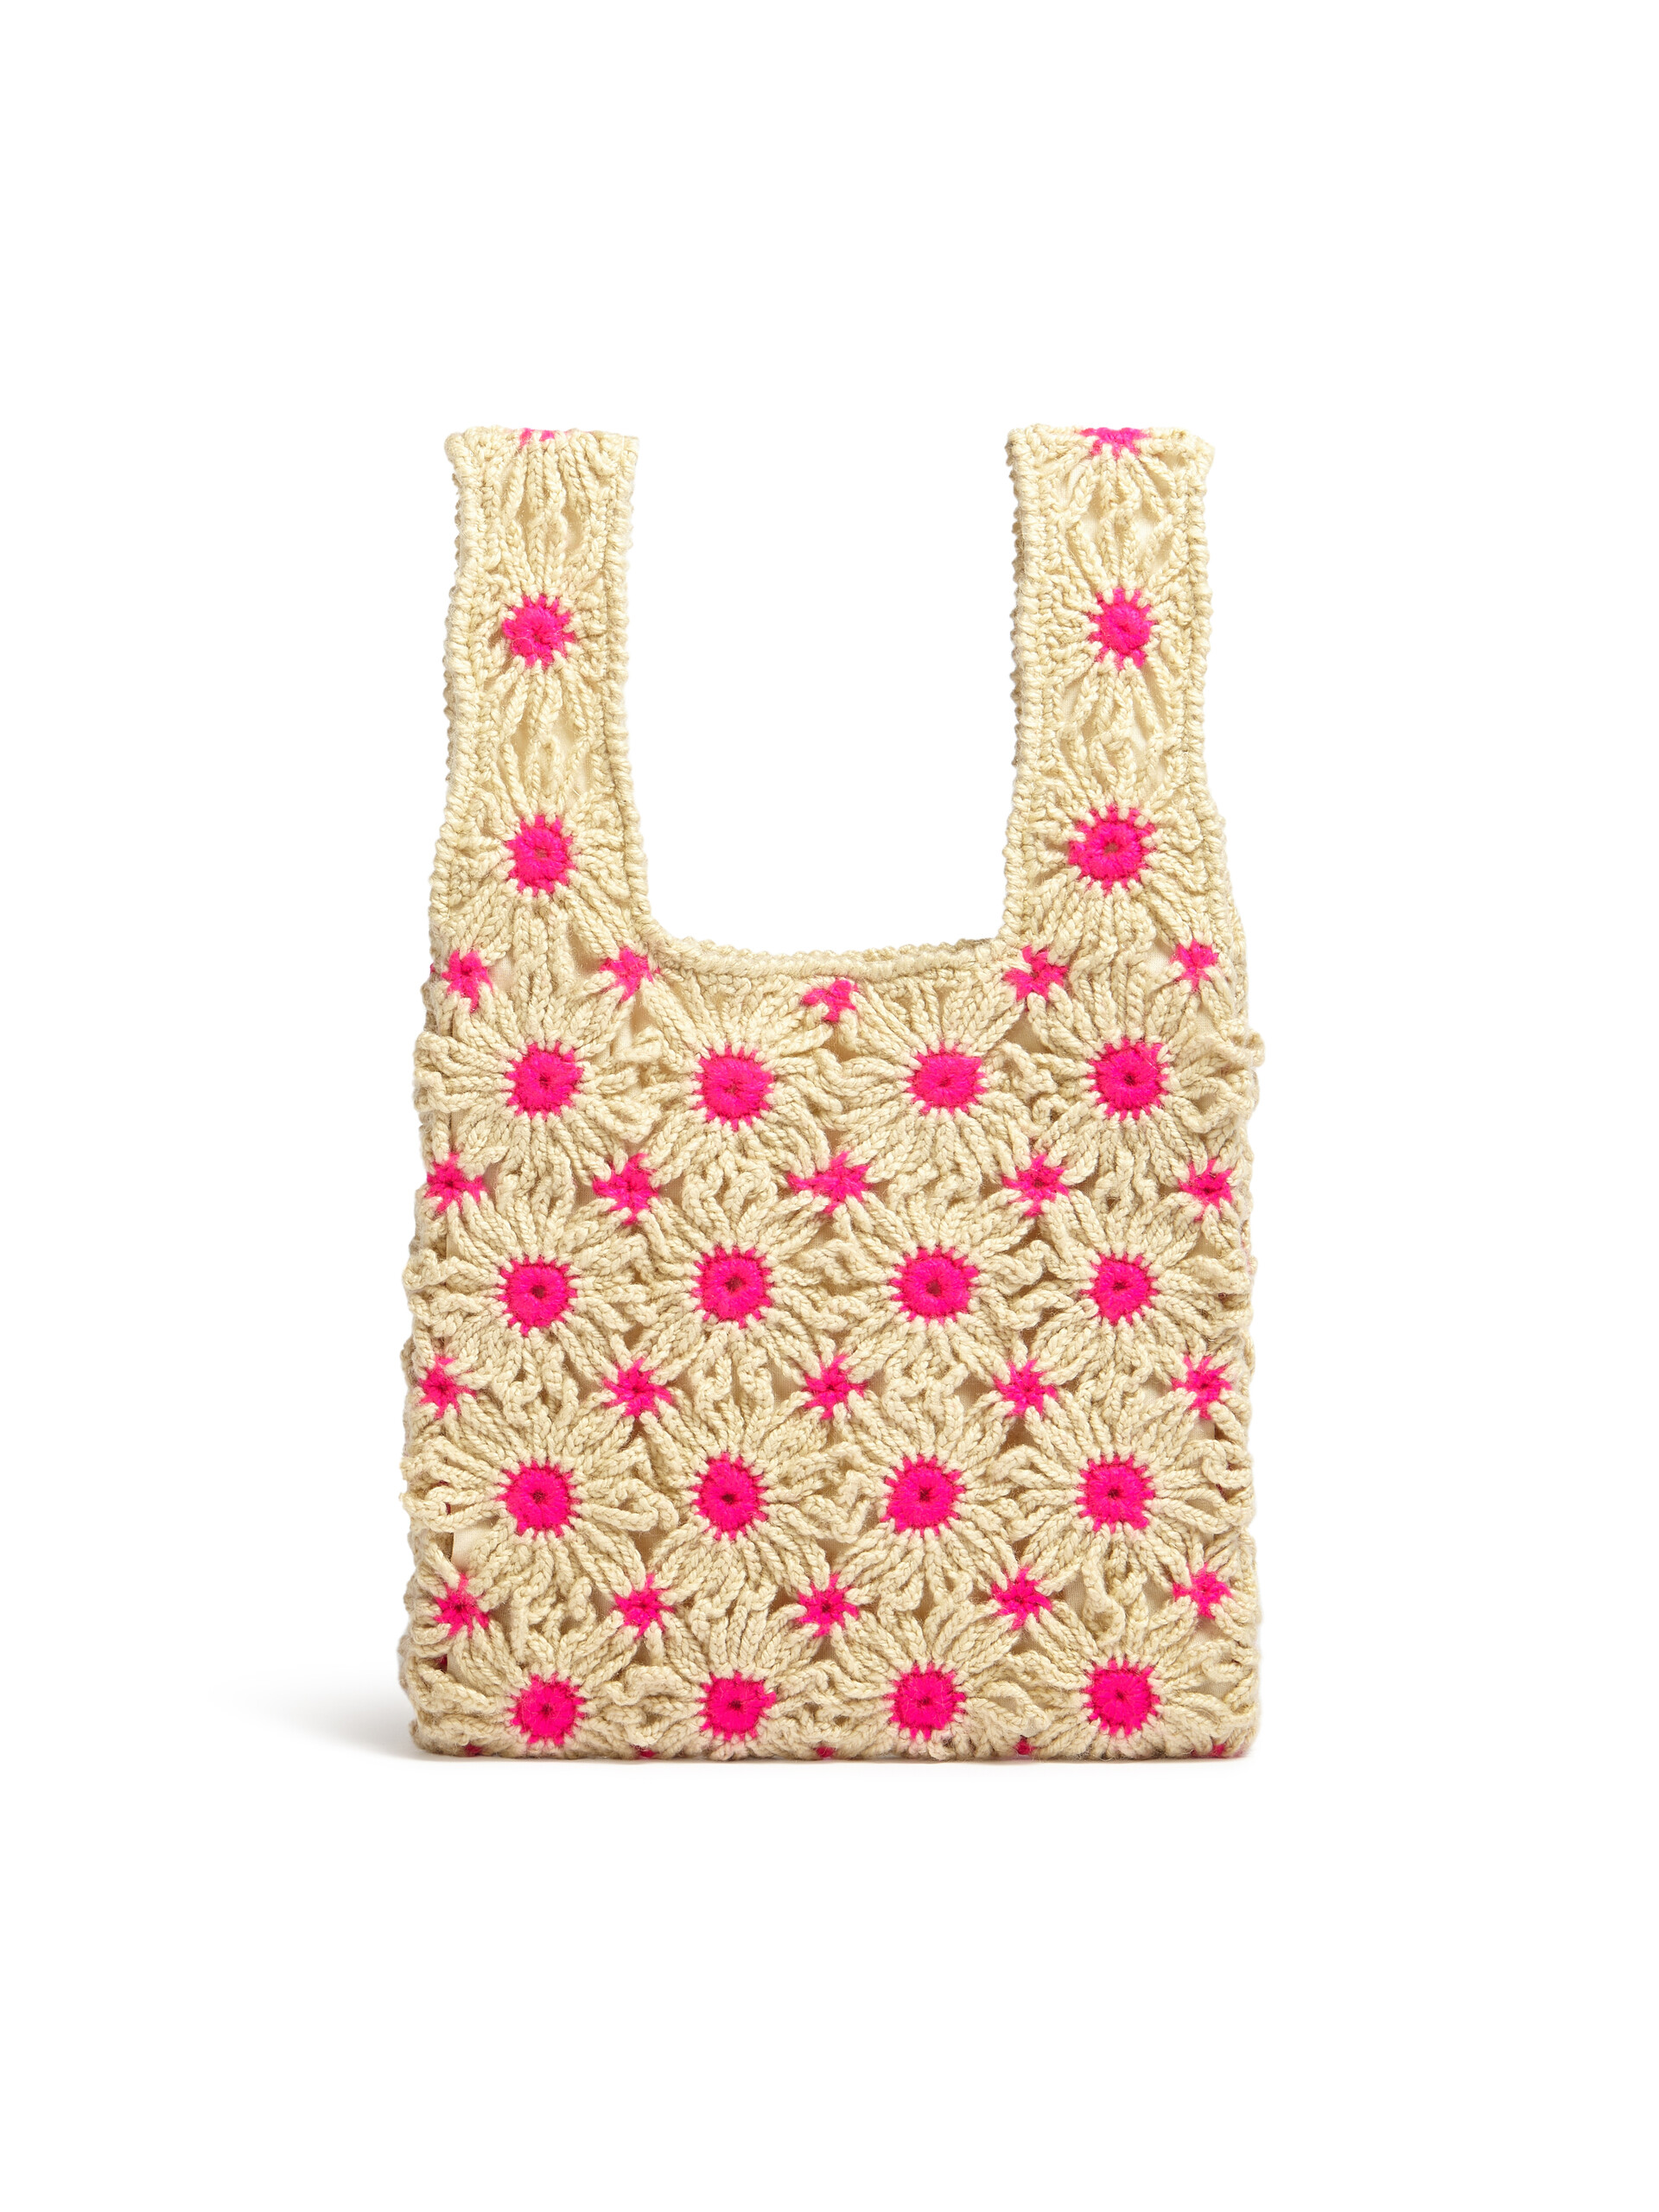 MARNI MARKET FISH bag in pink crochet - Shopping Bags - Image 3